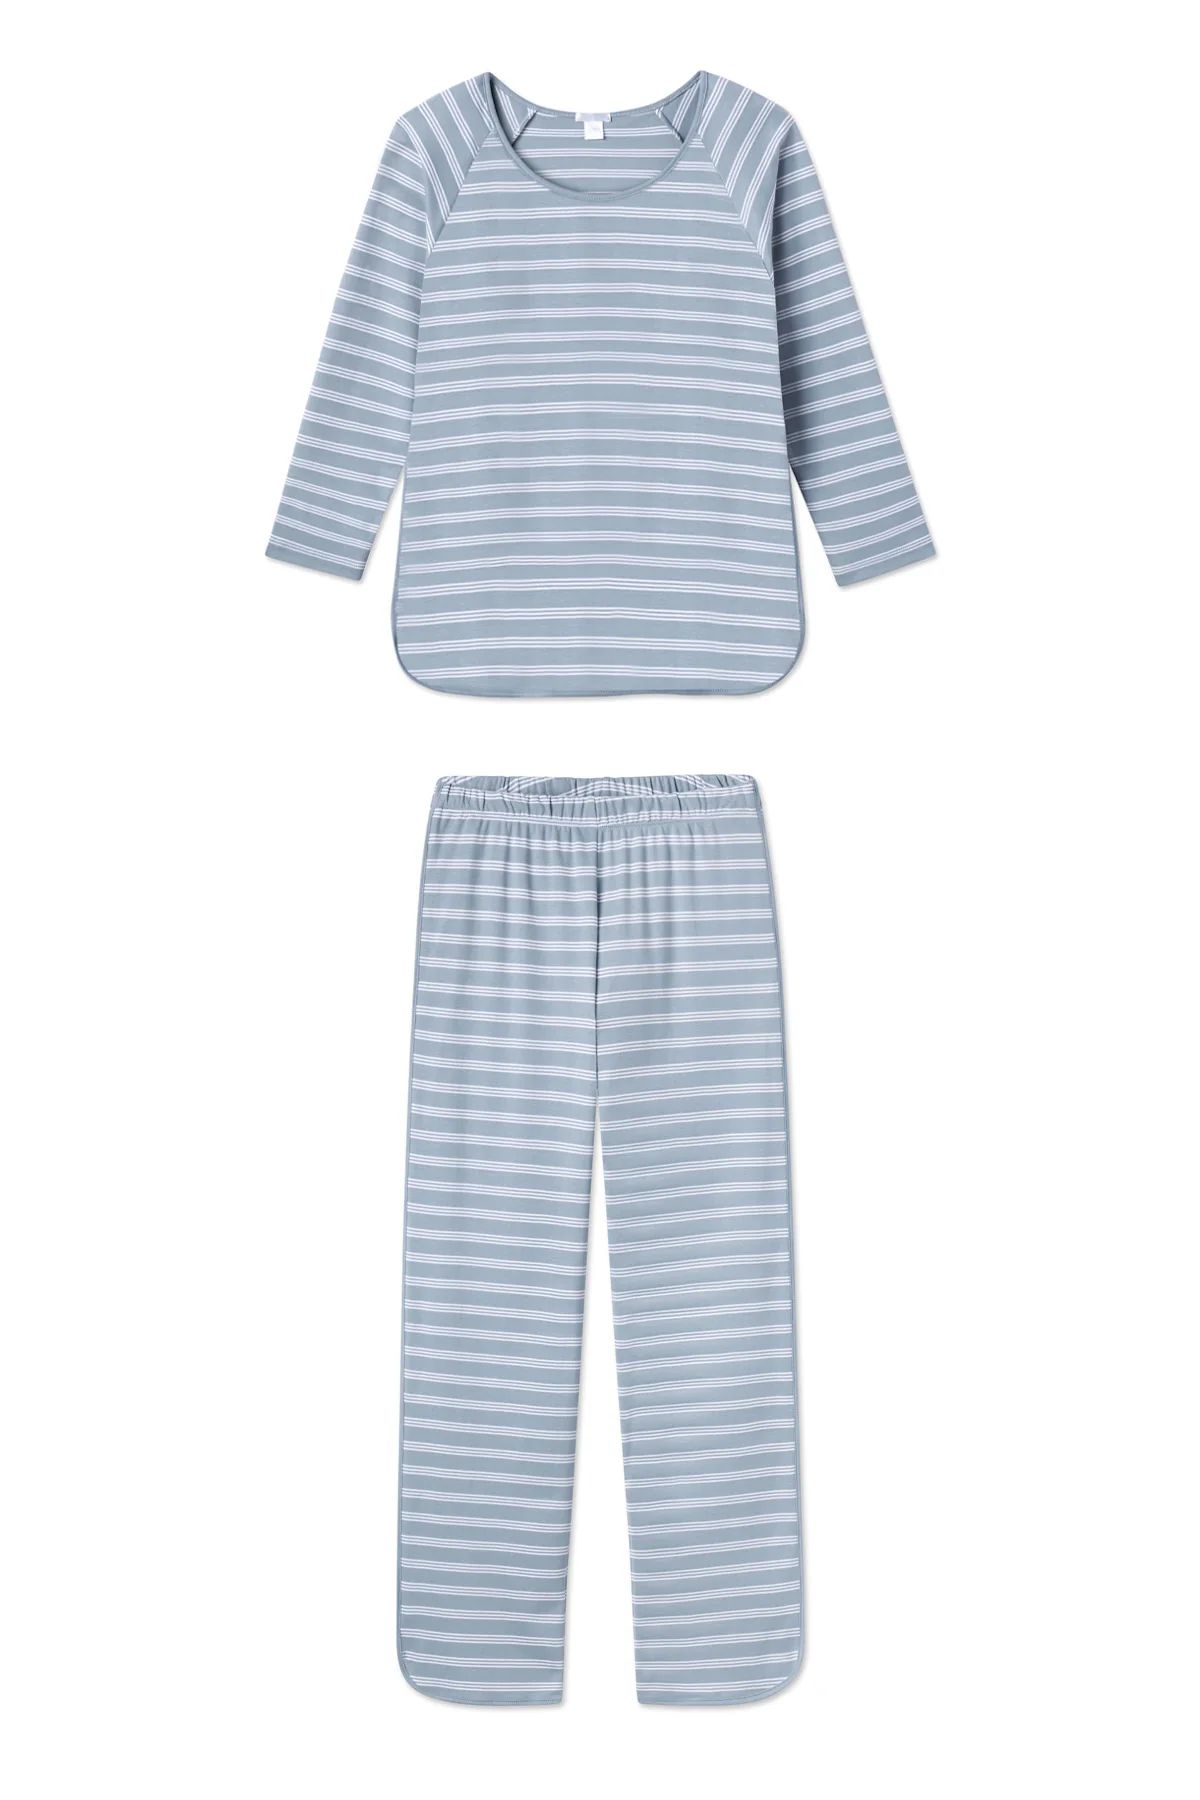 Pima Long-Long Set in Dusty Blue Stripe | Lake Pajamas